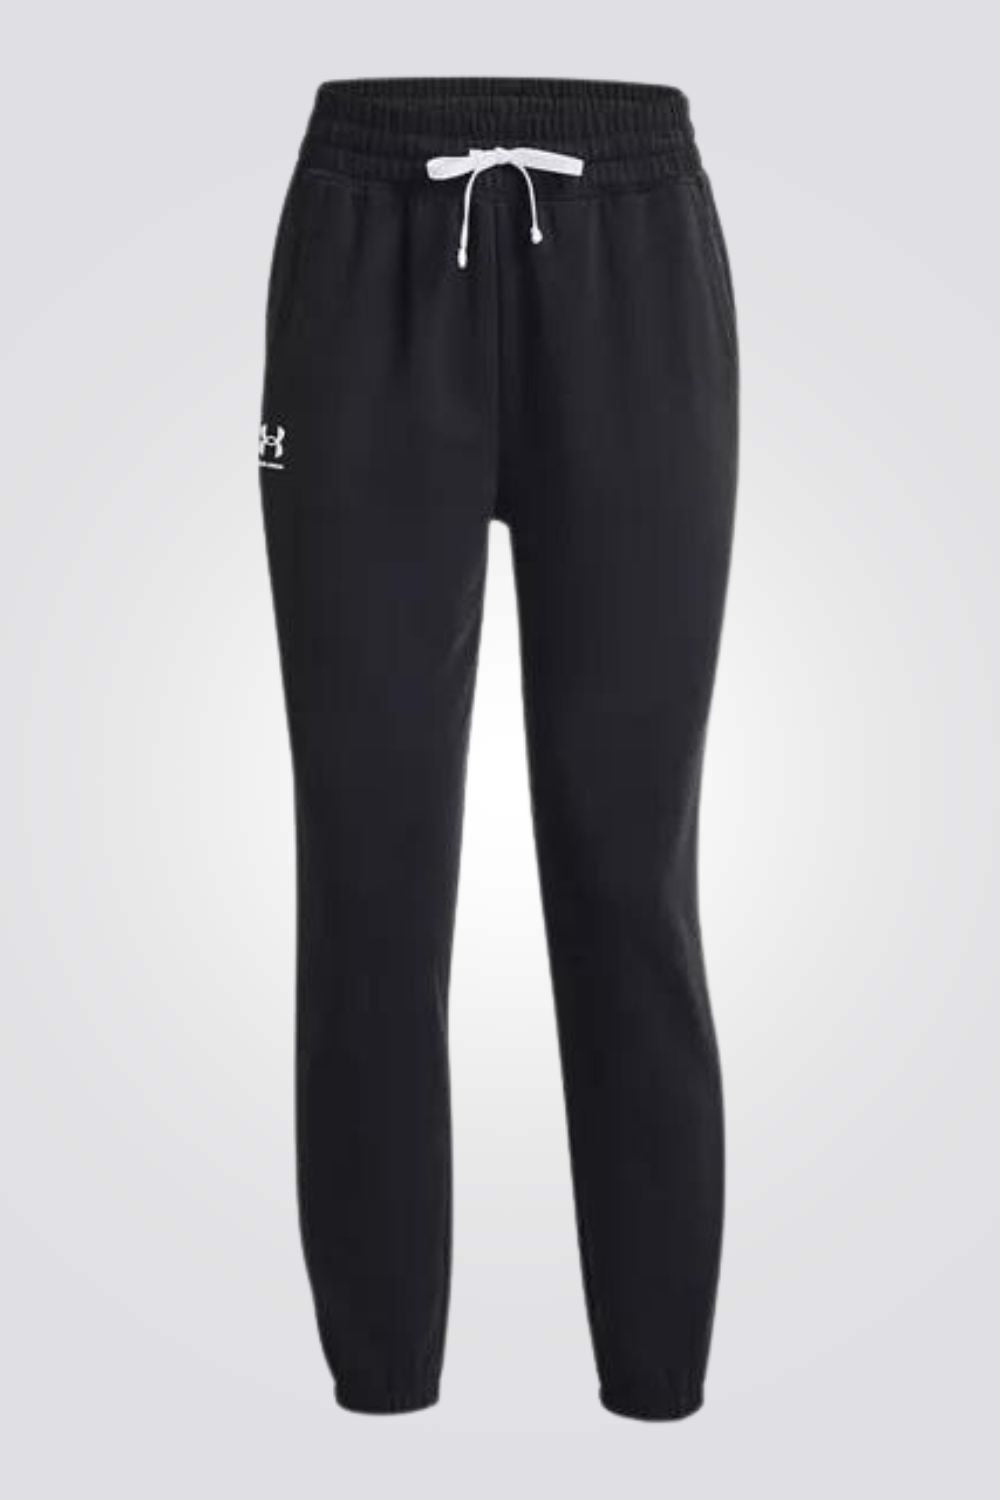 UNDER ARMOUR - מכנסיים ארוכים לנשים בצבע שחור - MASHBIR//365